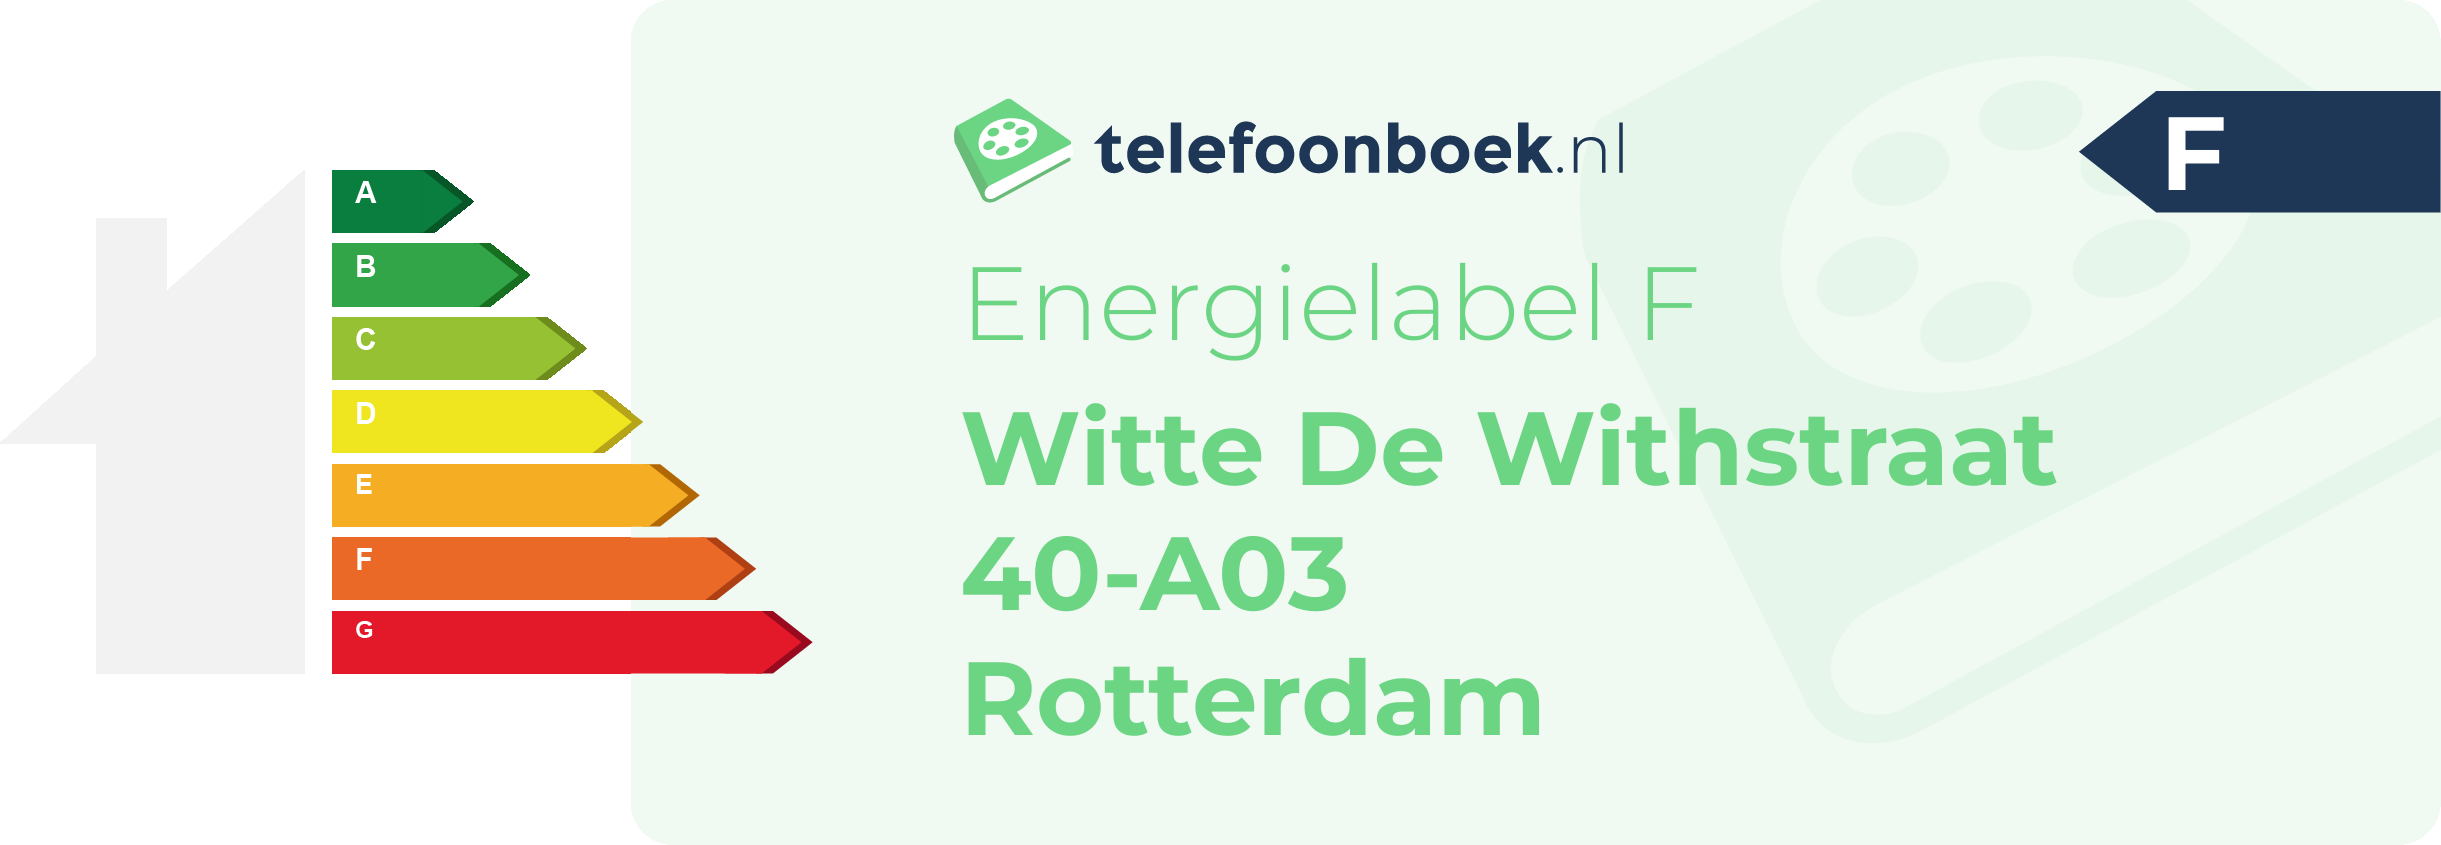 Energielabel Witte De Withstraat 40-A03 Rotterdam